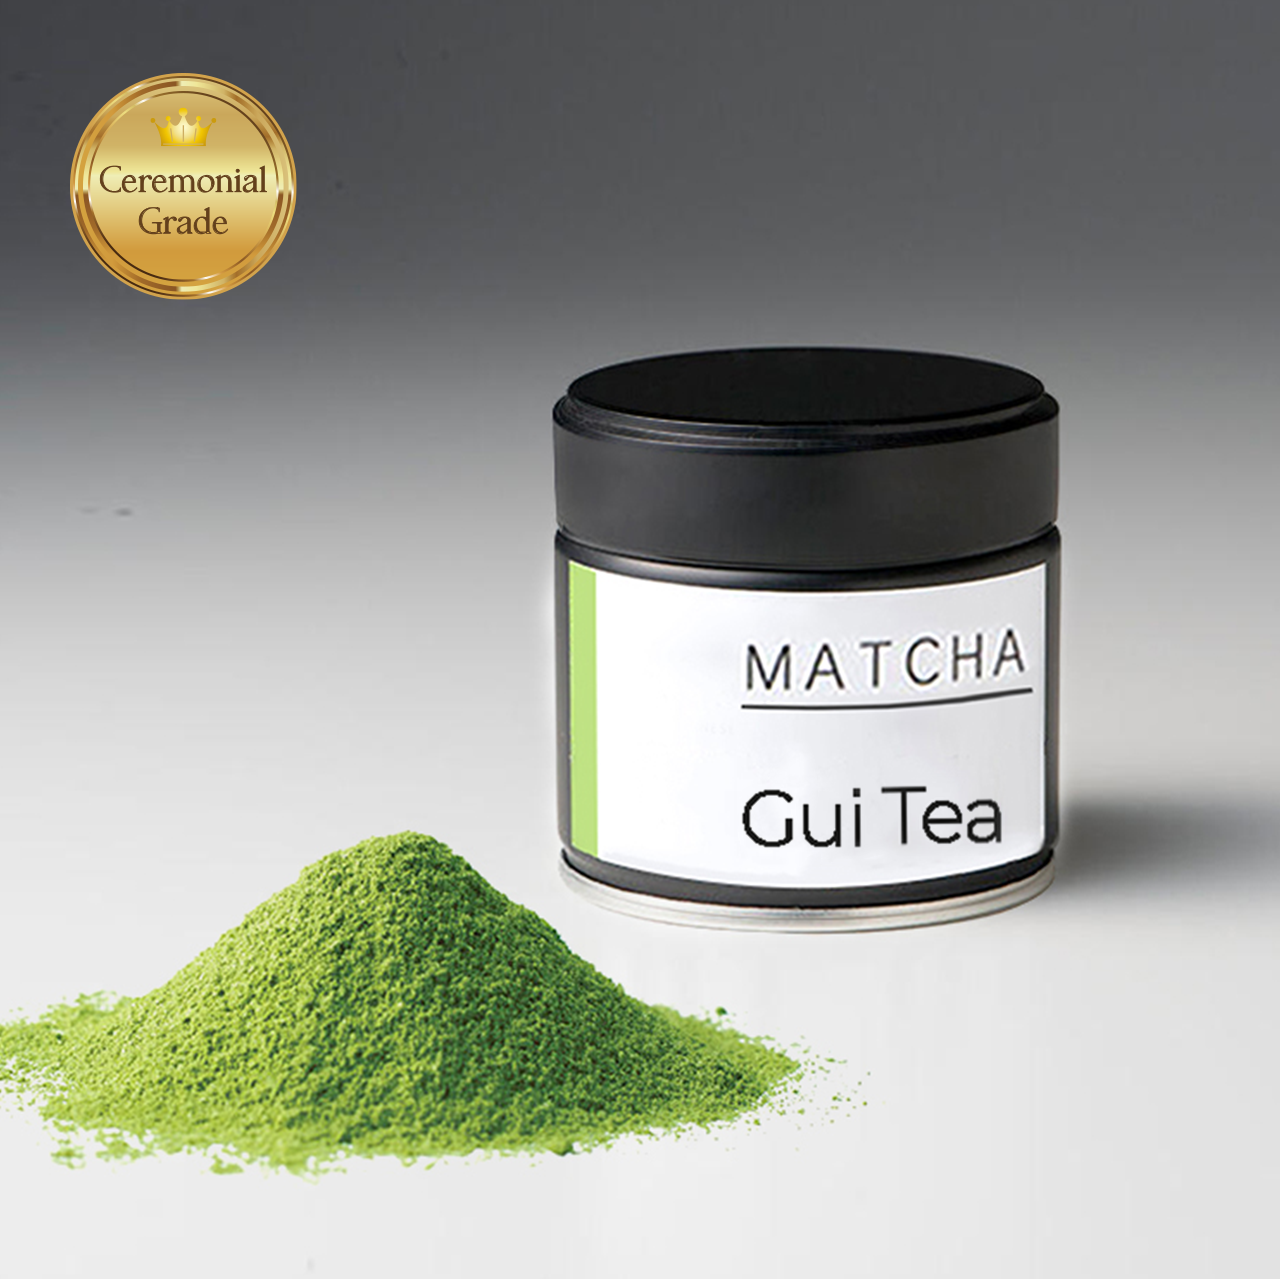 Gui Tea Ceremonial Grade Matcha in Can 30g – Gui Tea Matcha